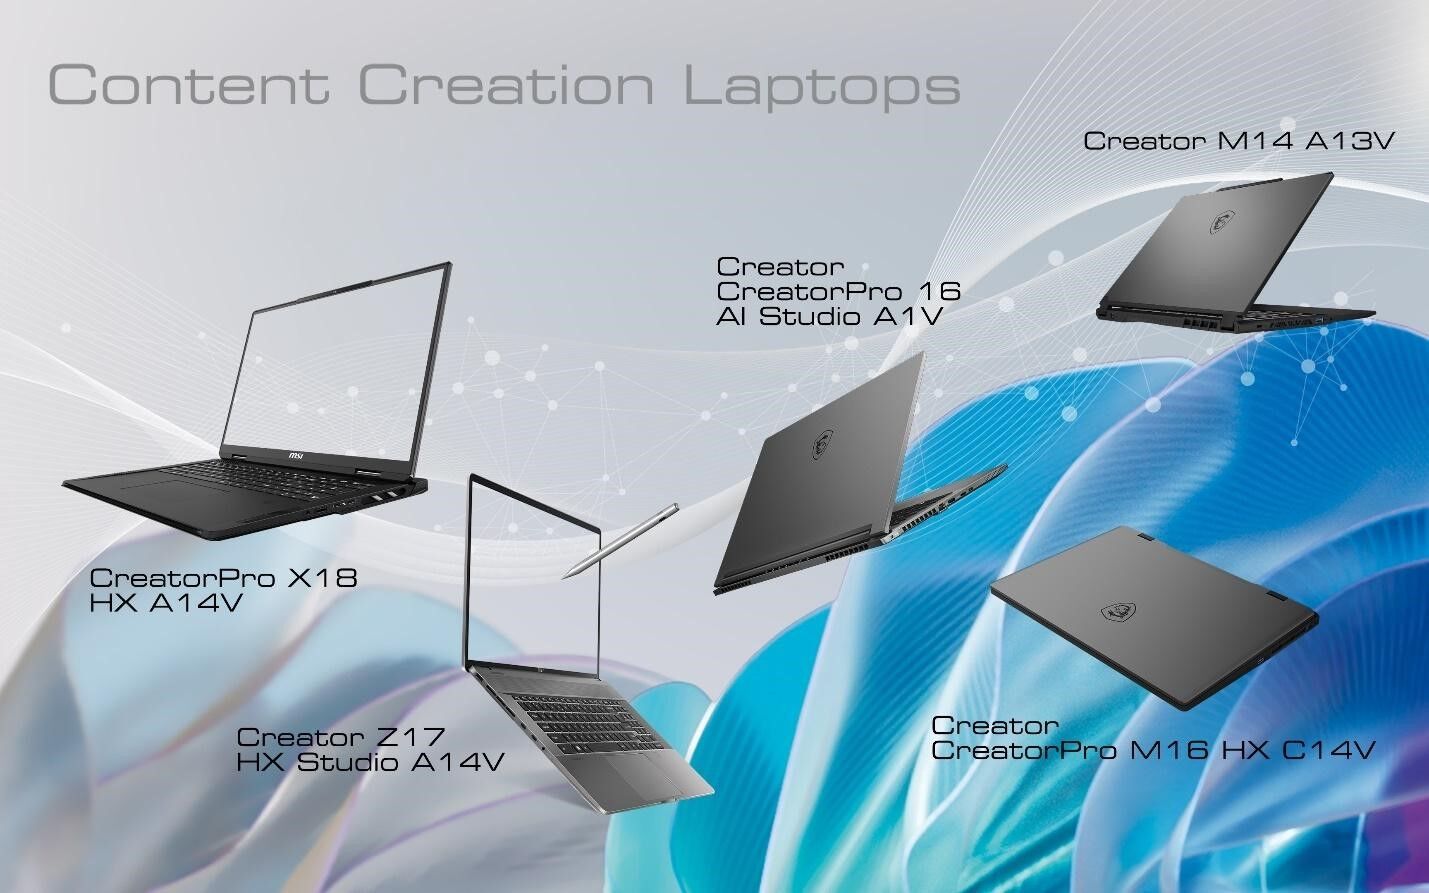 MSI prezentuje nowe laptopy - Titan 18 HX, Raider 18 HX oraz Stealth 18 AI Studio 2